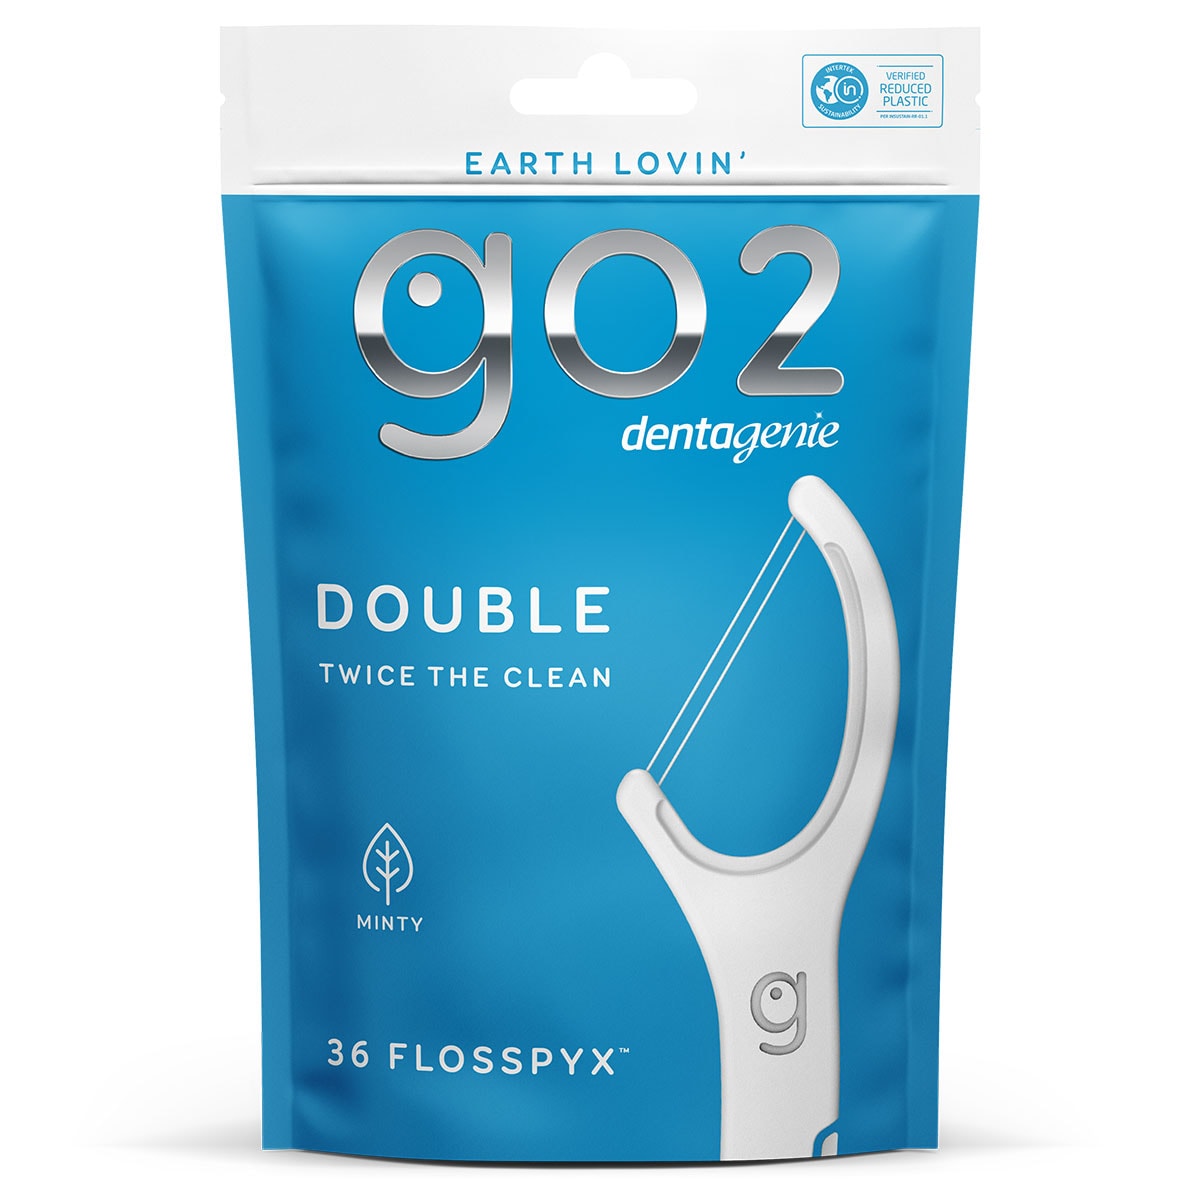 GO2 Dentagenie Double Flosspyx Minty 36 Pack